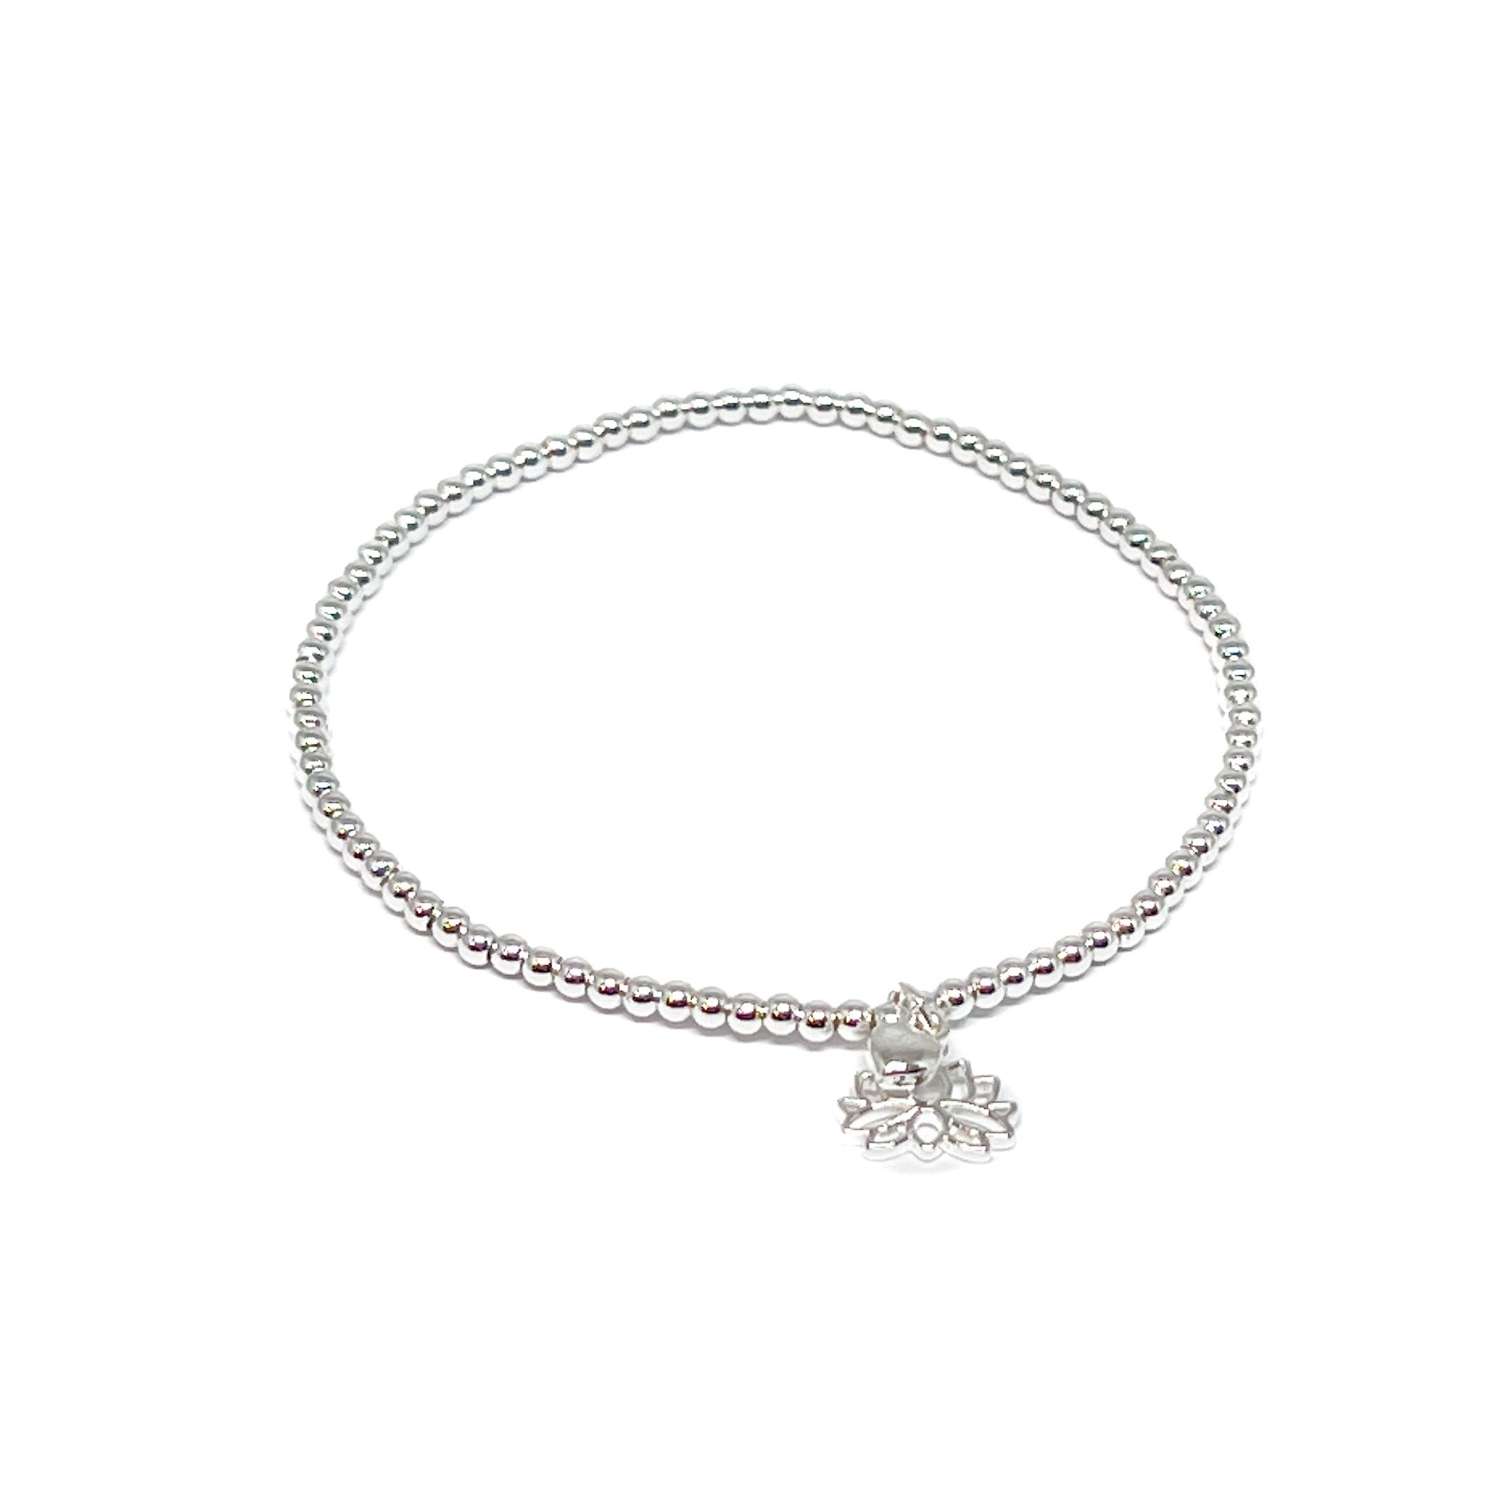 Indigo Lotus Flower Bracelet - Silver